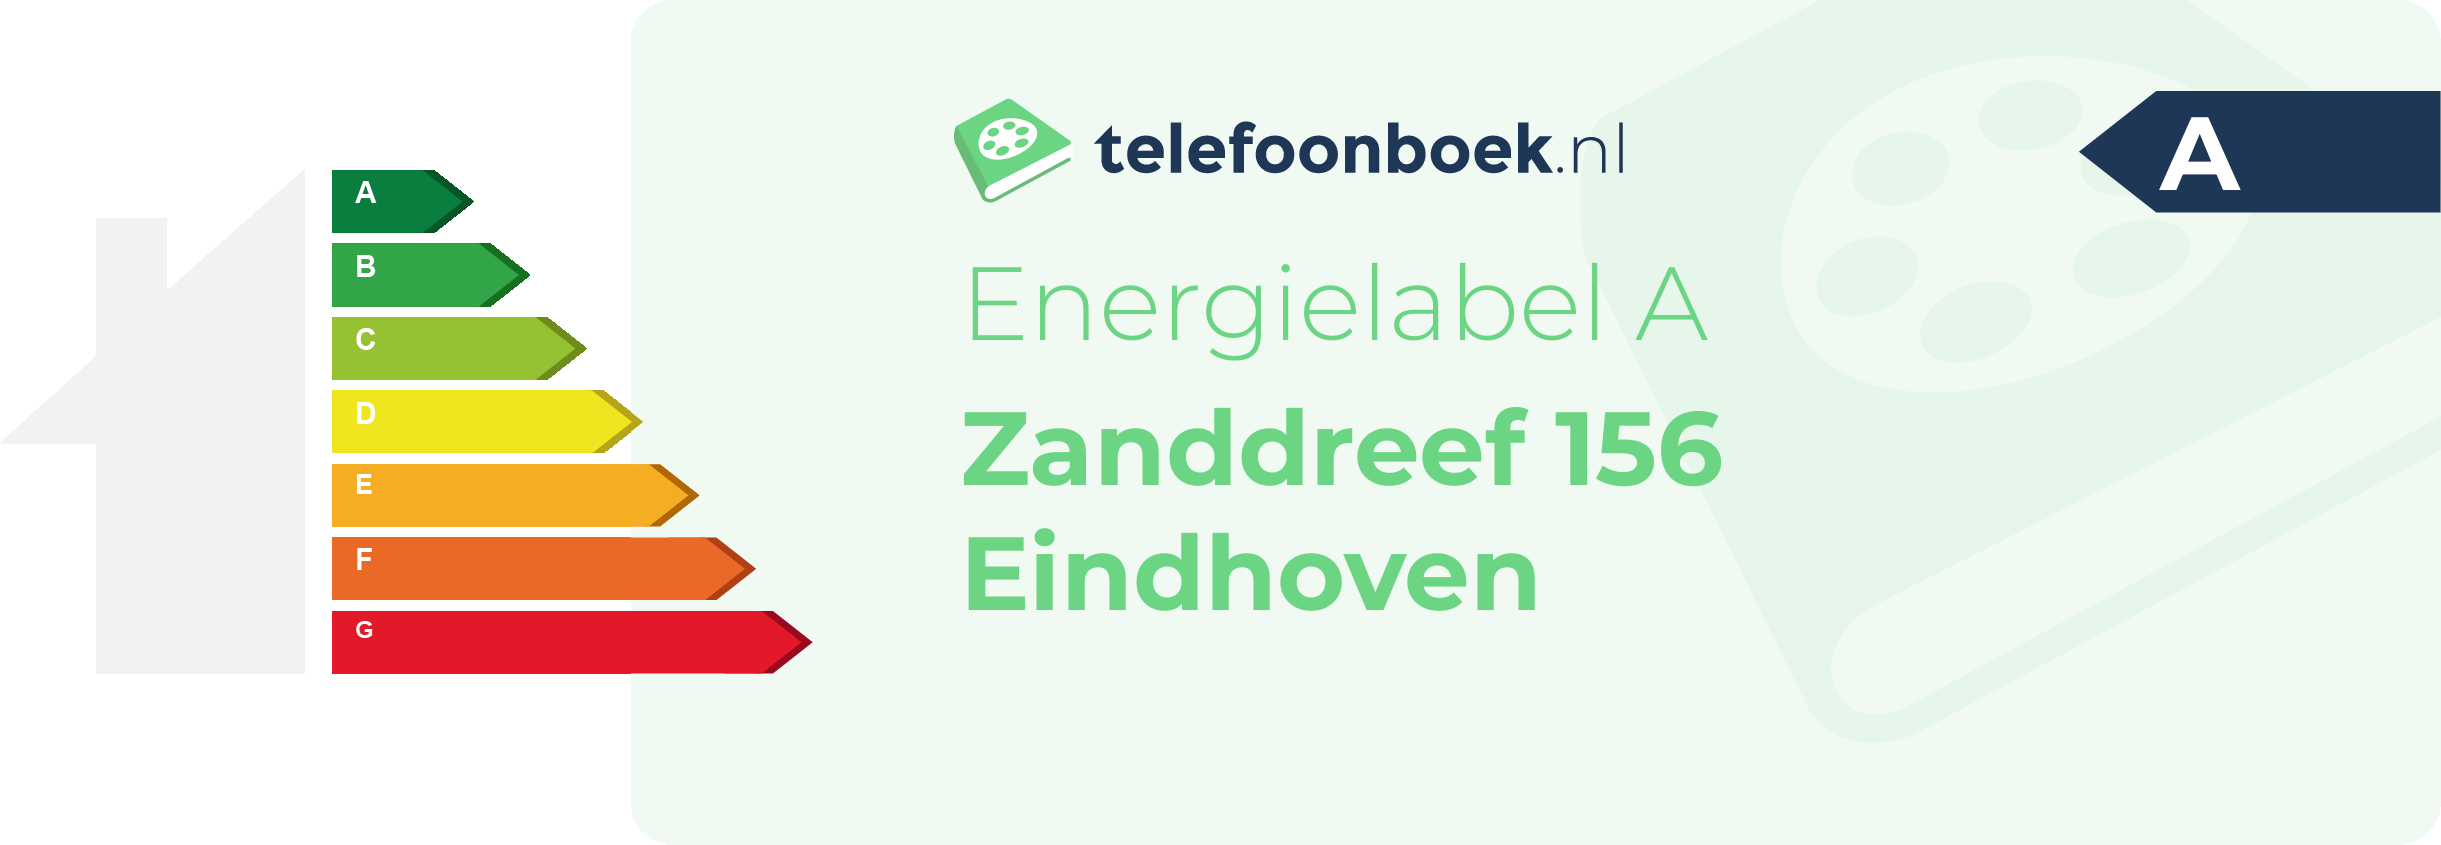 Energielabel Zanddreef 156 Eindhoven